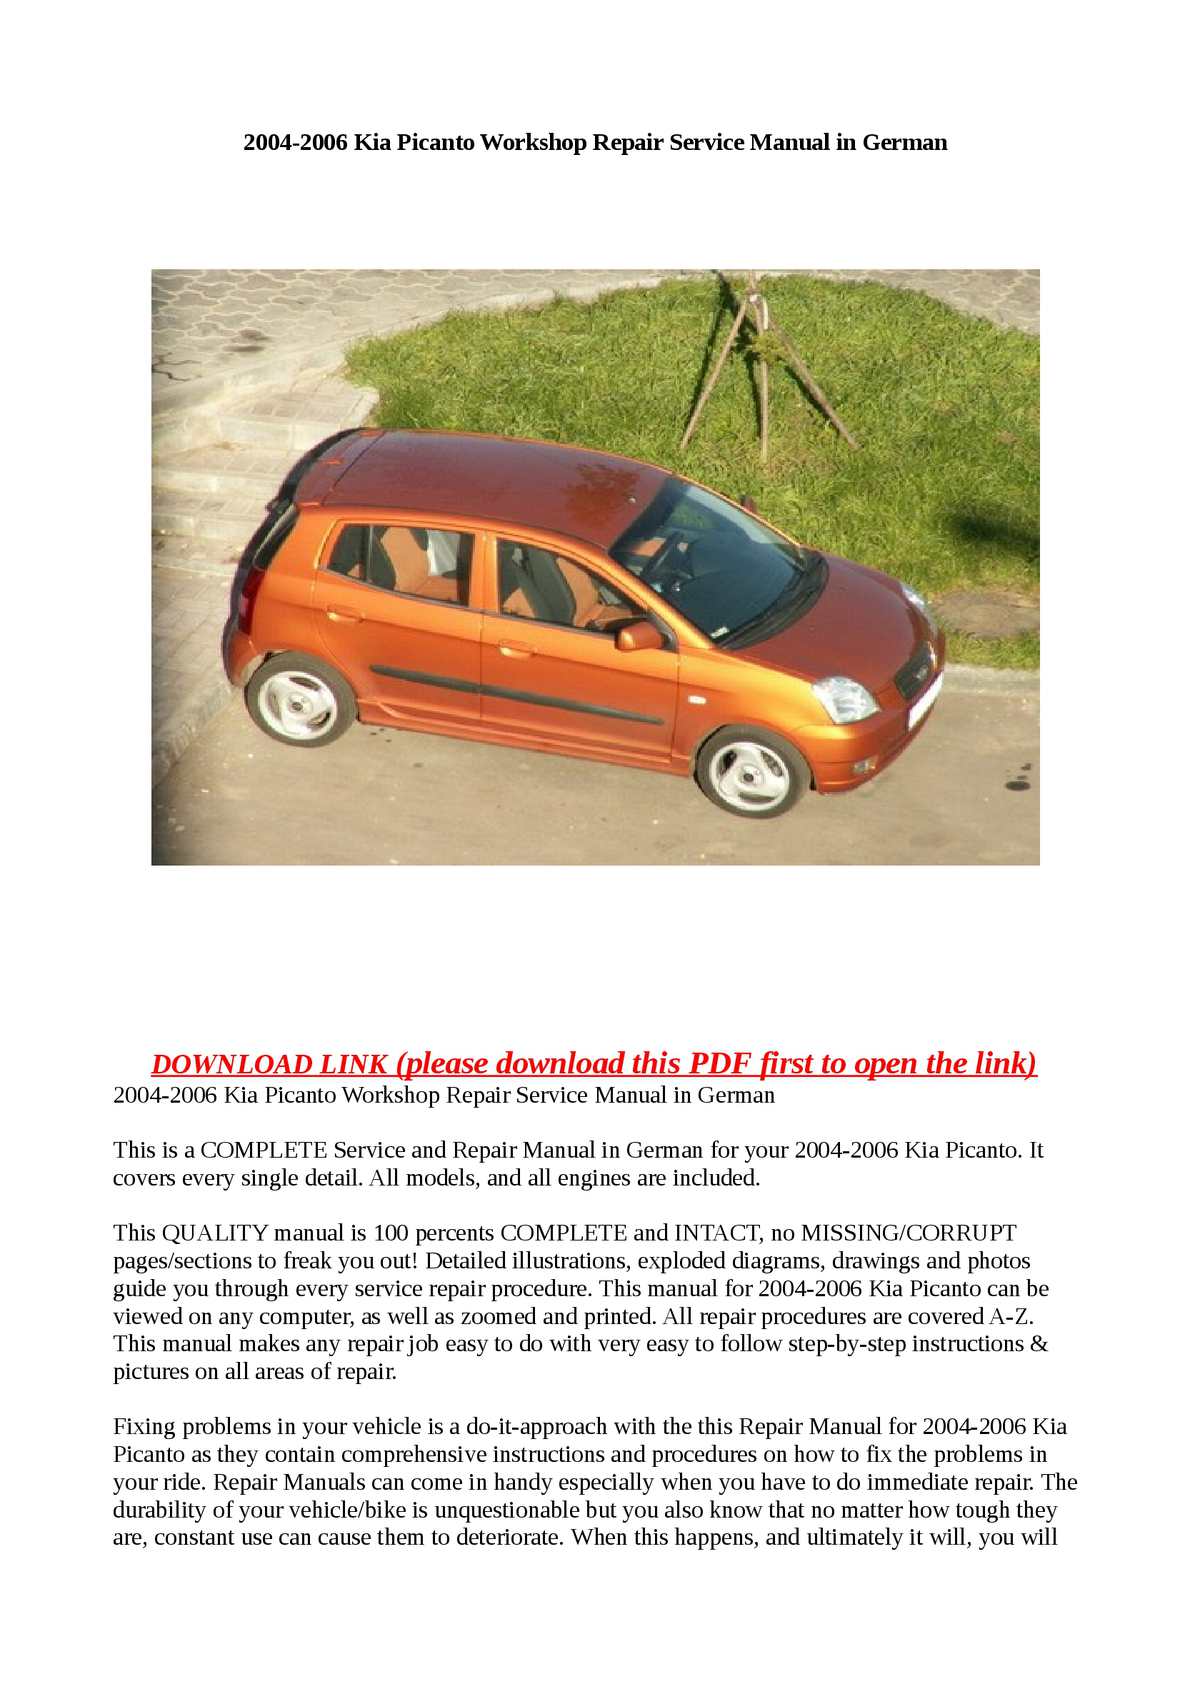 Chevrolet spark service manual download